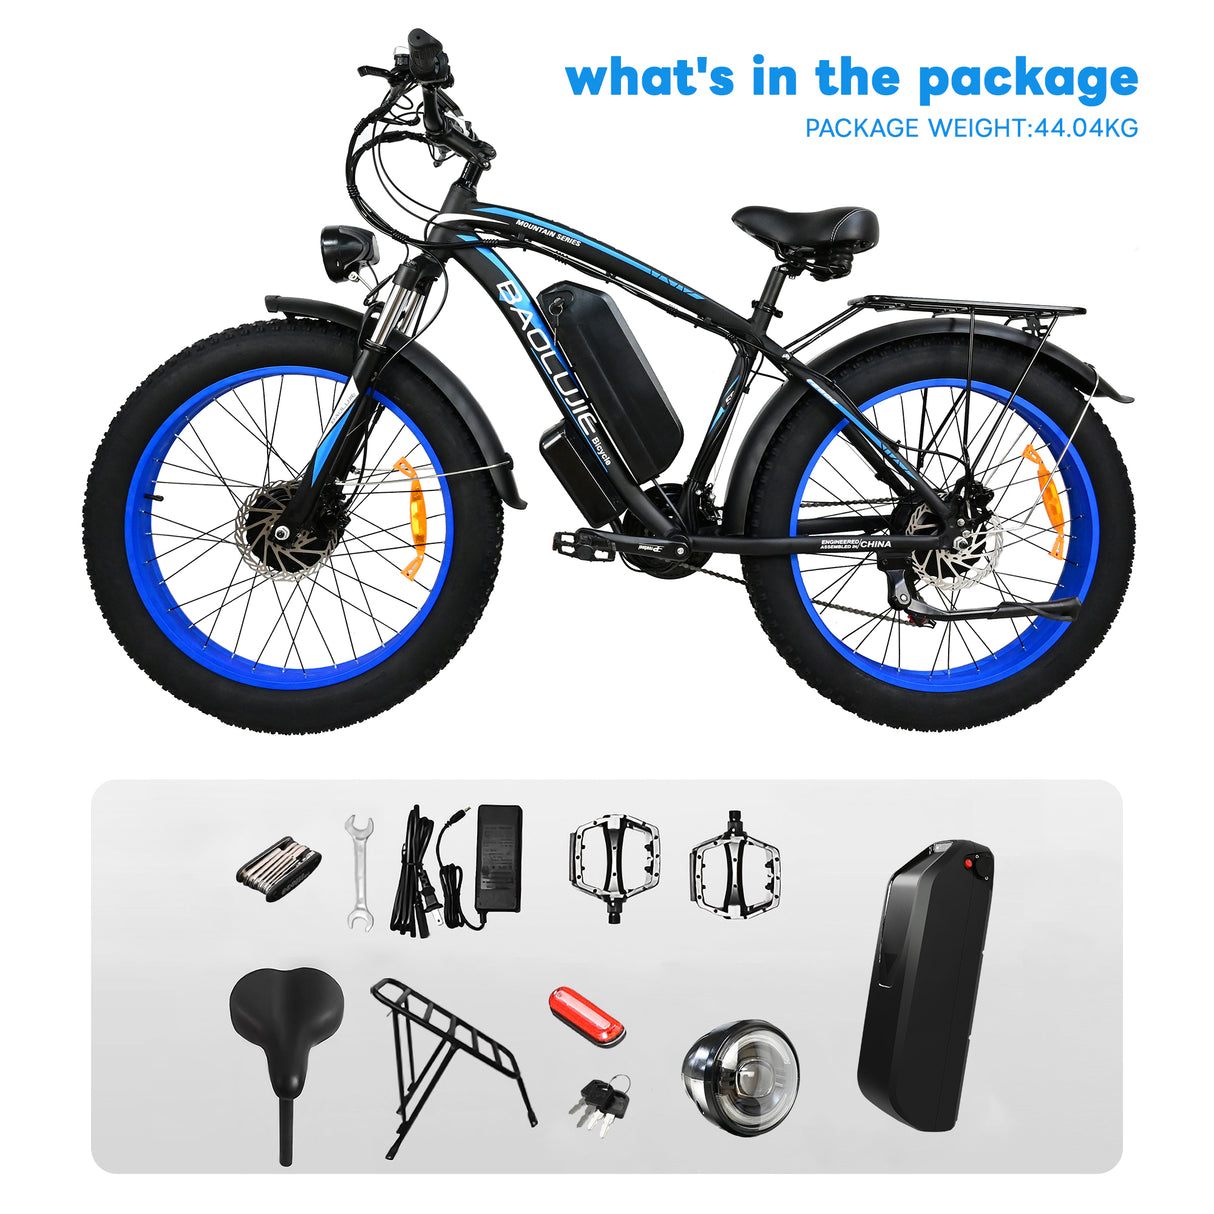 poleejiek mountain ebike Include components ebike, bag, battery, charge, installing kits, manual.